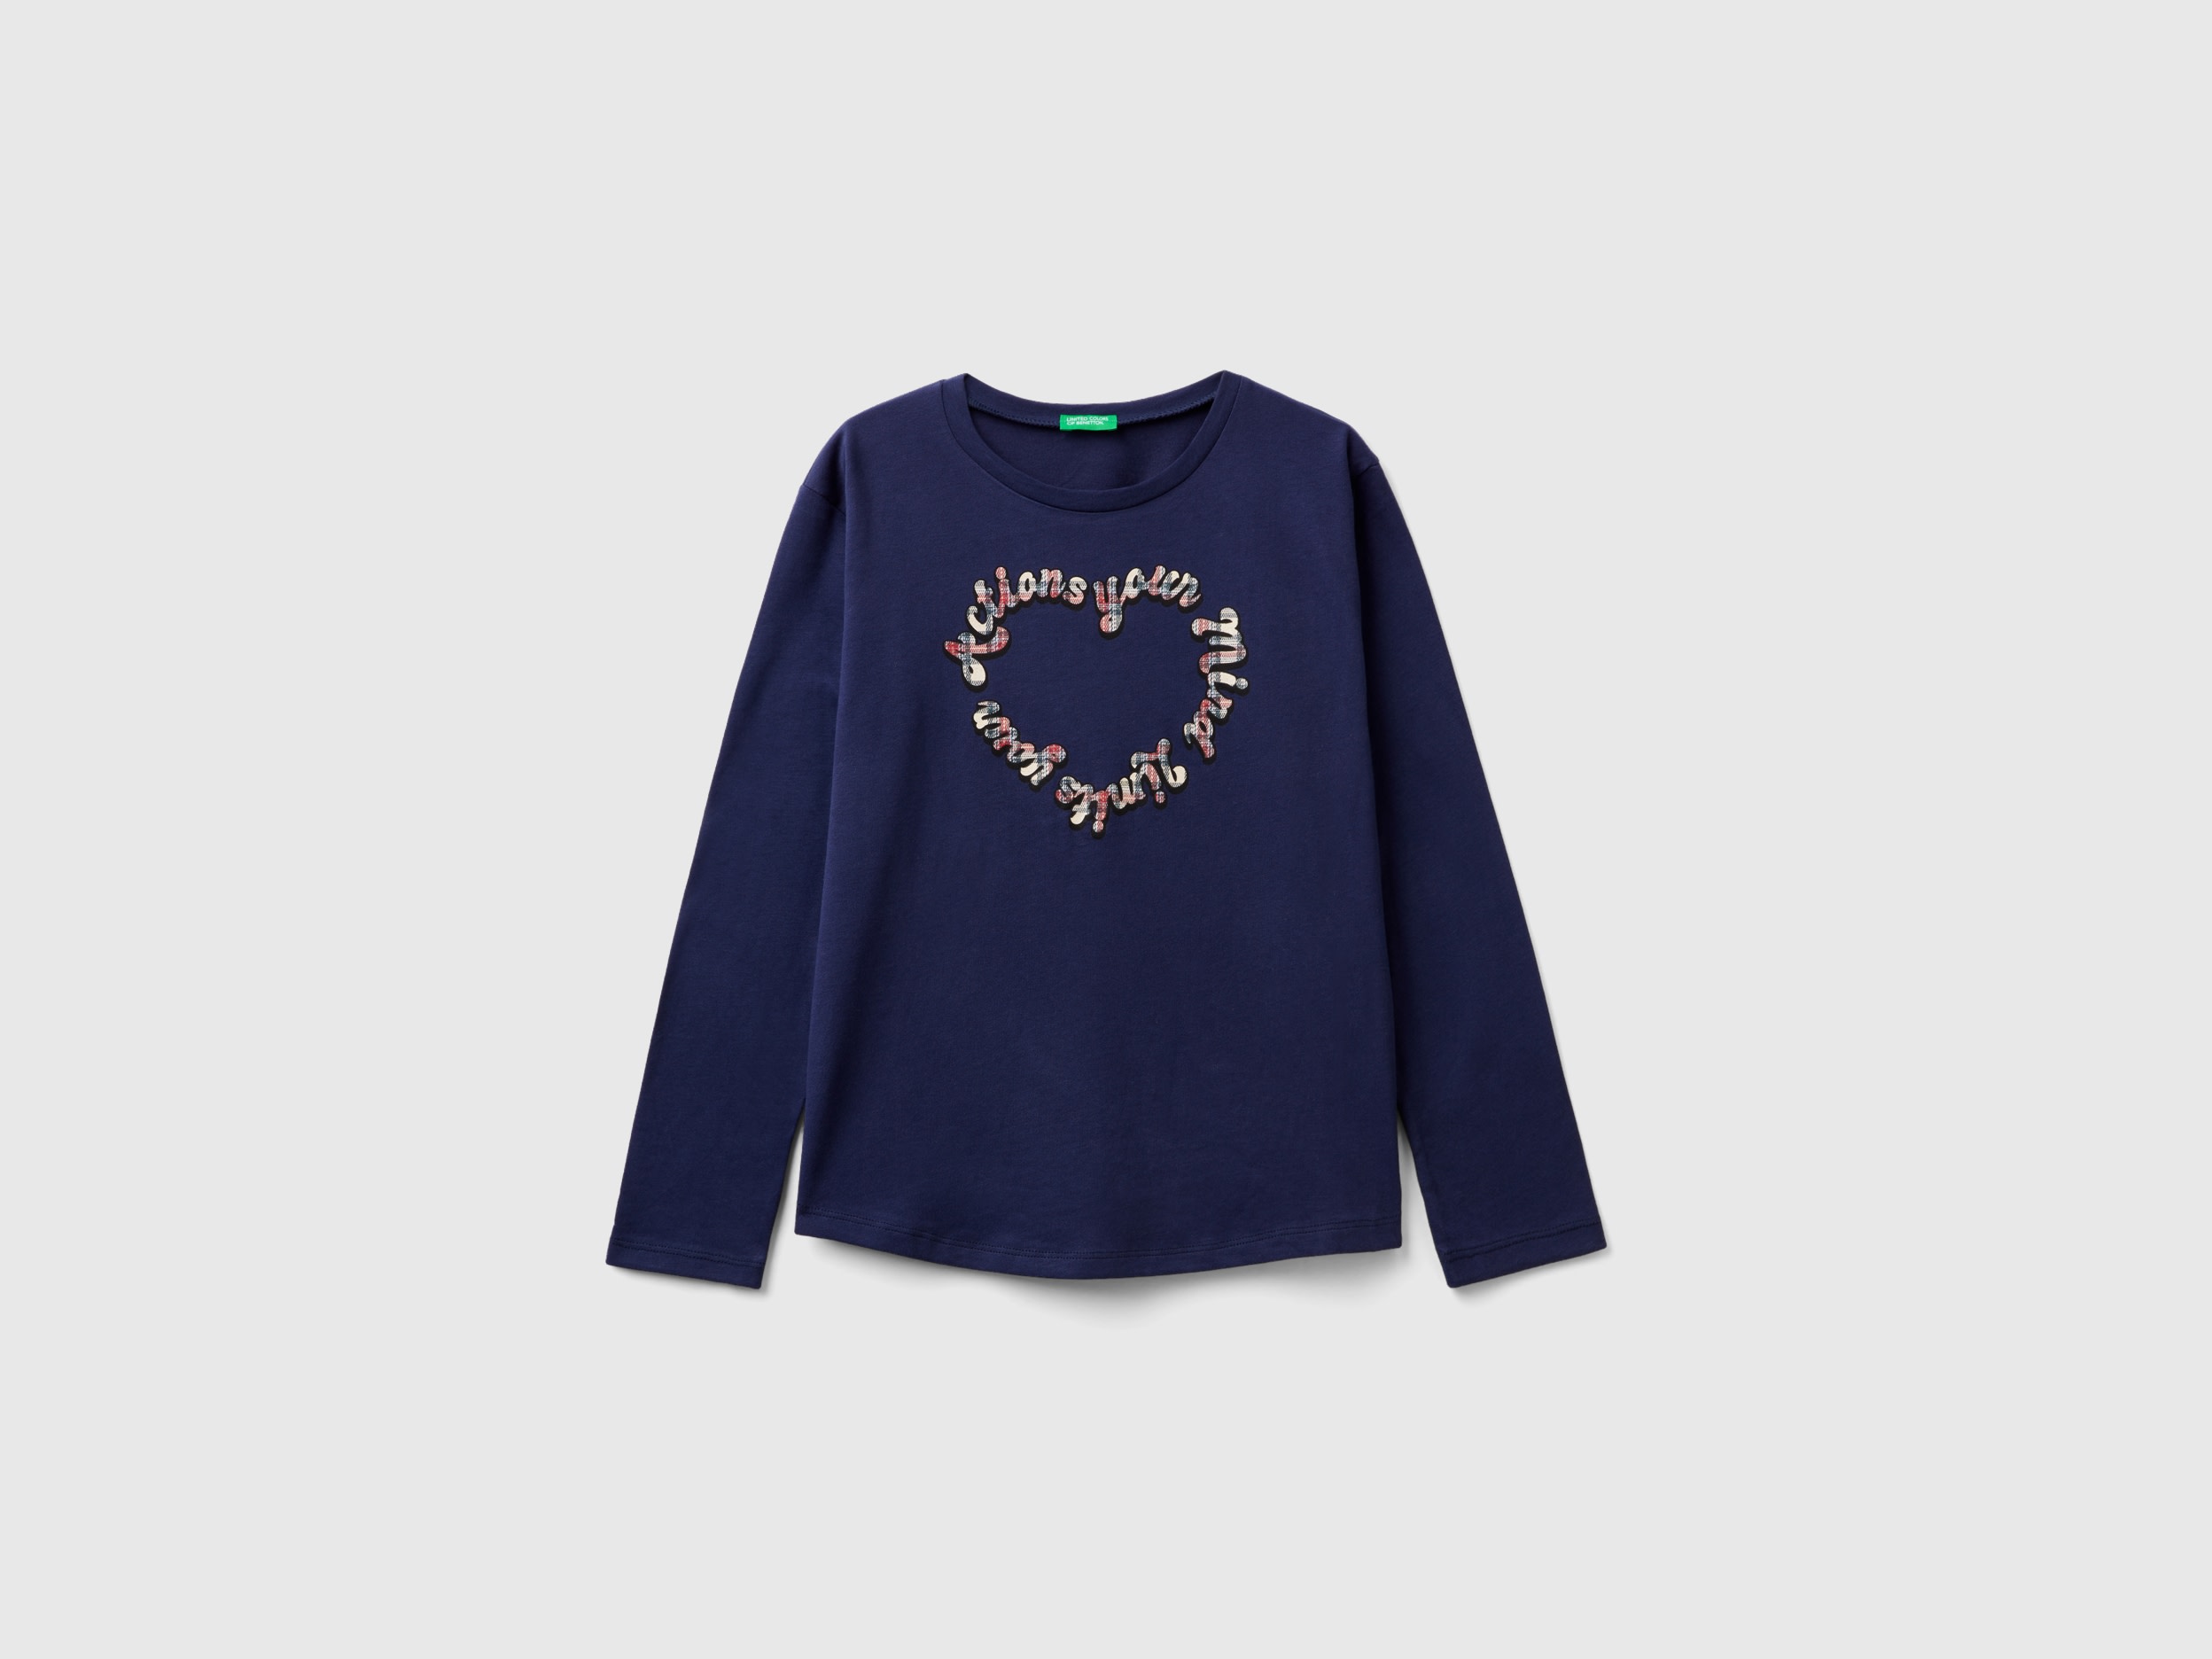 Benetton, Warm Cotton T-shirt With Glittery Print, size 3XL, Dark Blue, Kids